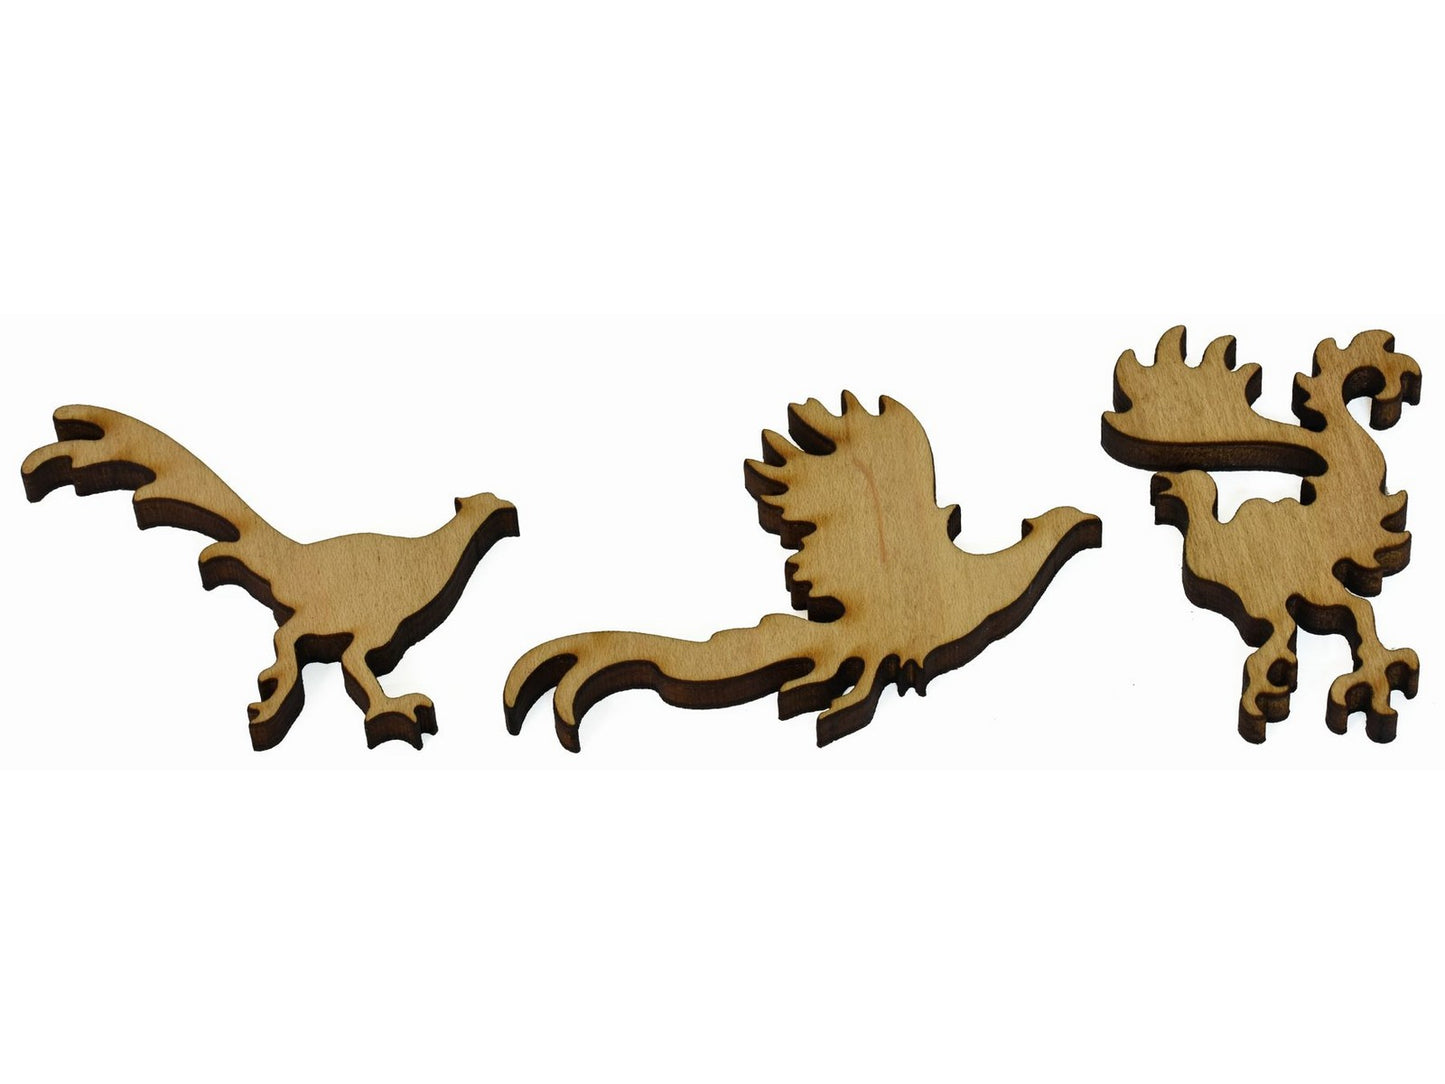 A closeup of pieces showing three birds.